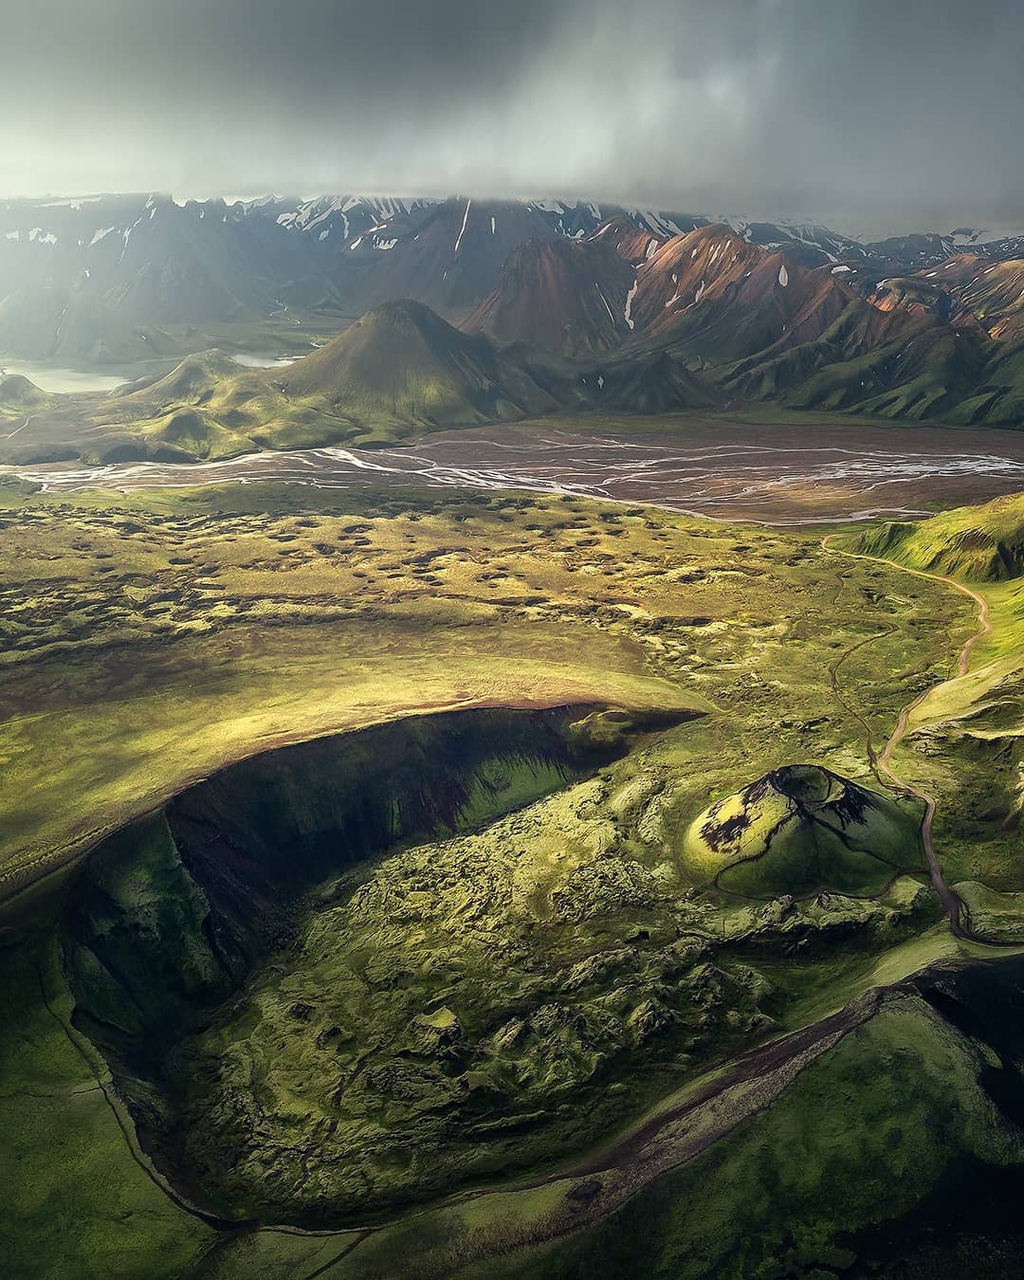 Iceland hoa thuoc phim vien tuong voi nhung mien dat mau xanh hinh anh 9 5.1.jpg